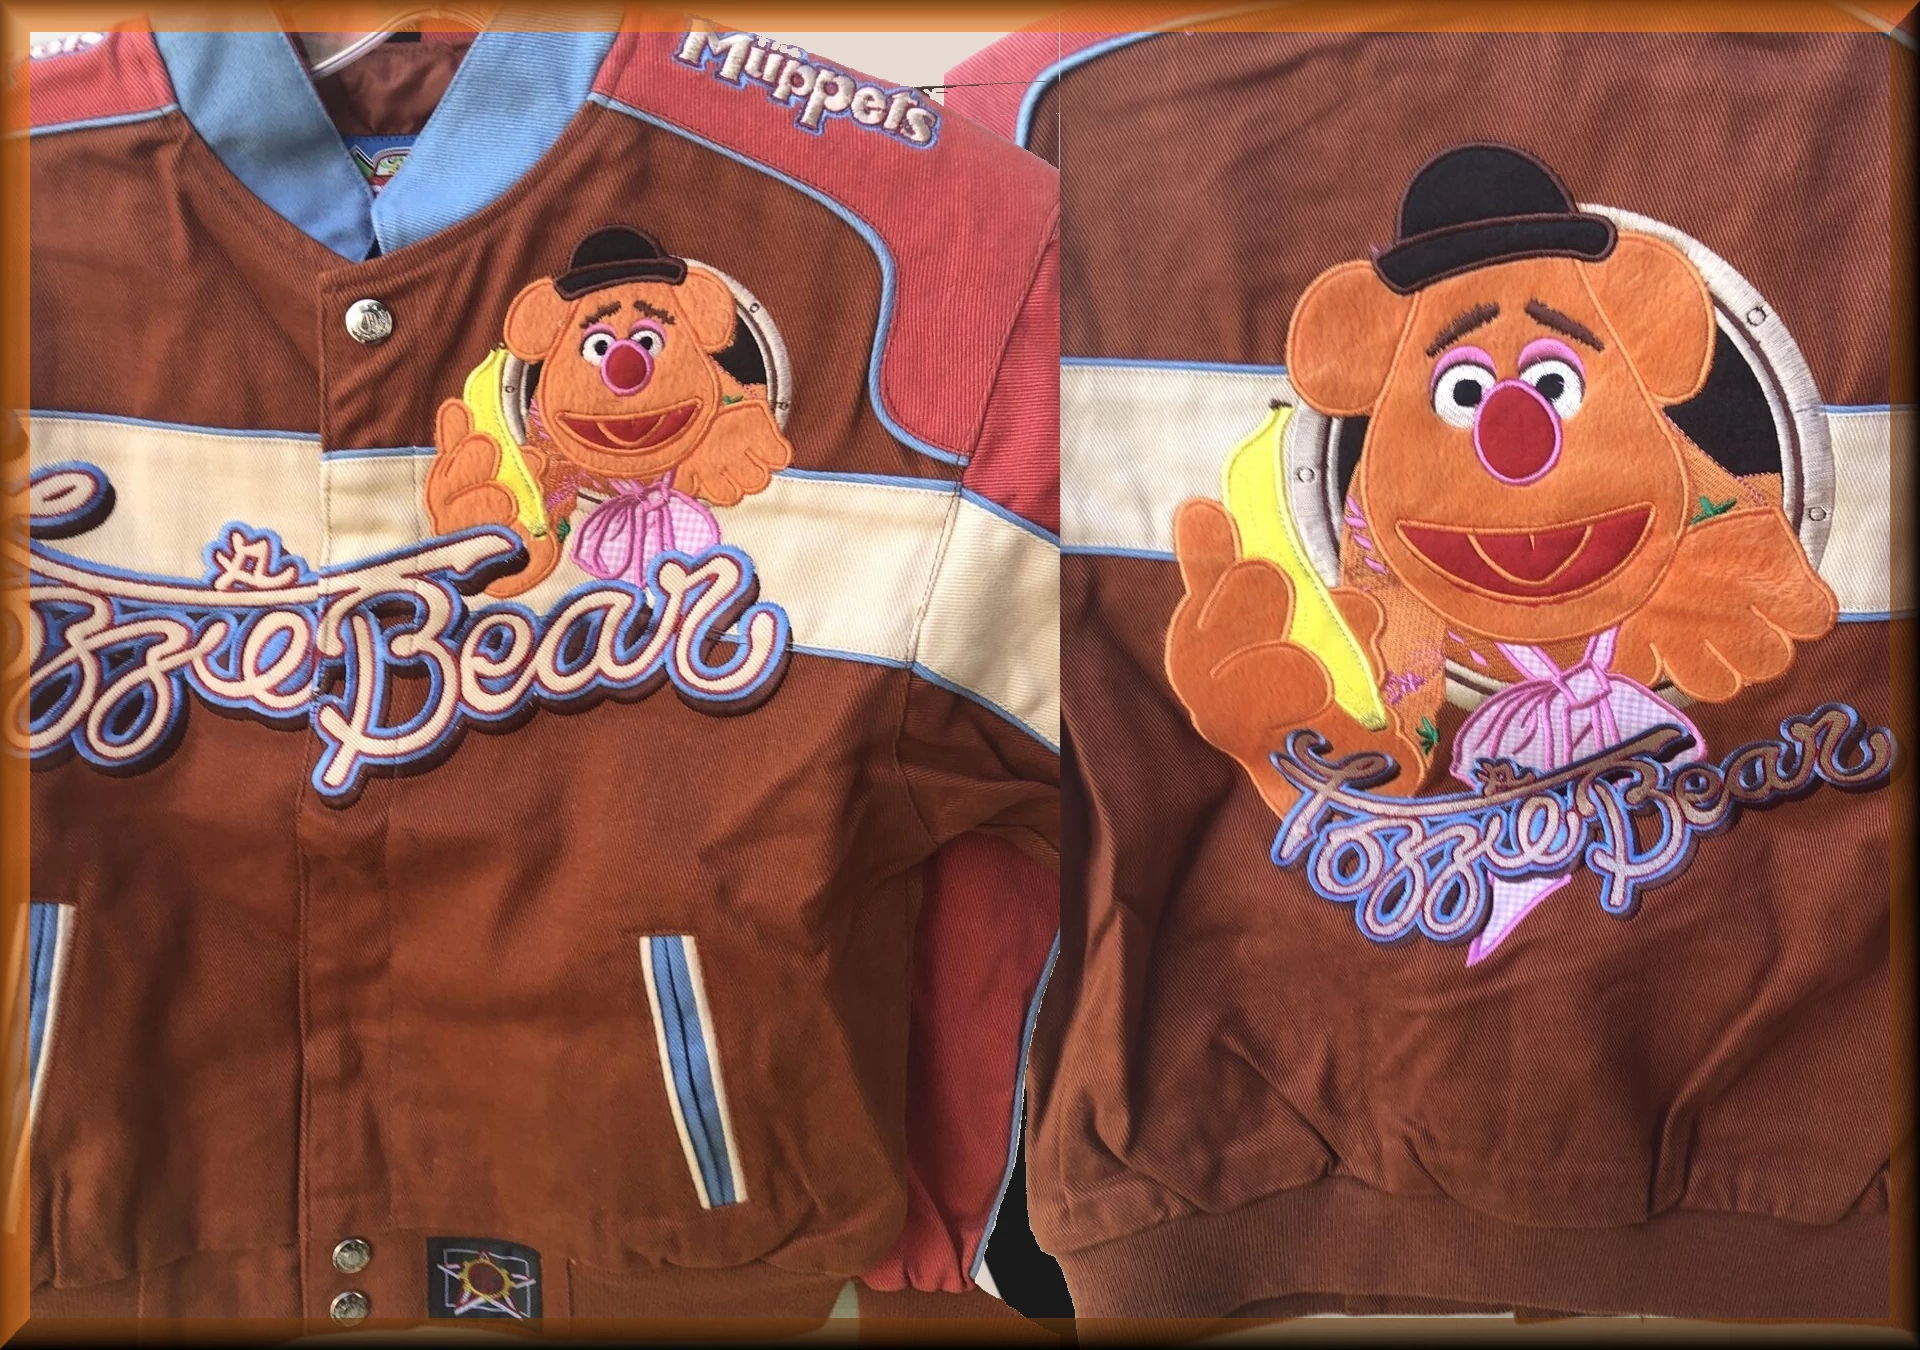 NOS - Muppets Fozzie Bear Kids Disney Jacket by JH Design